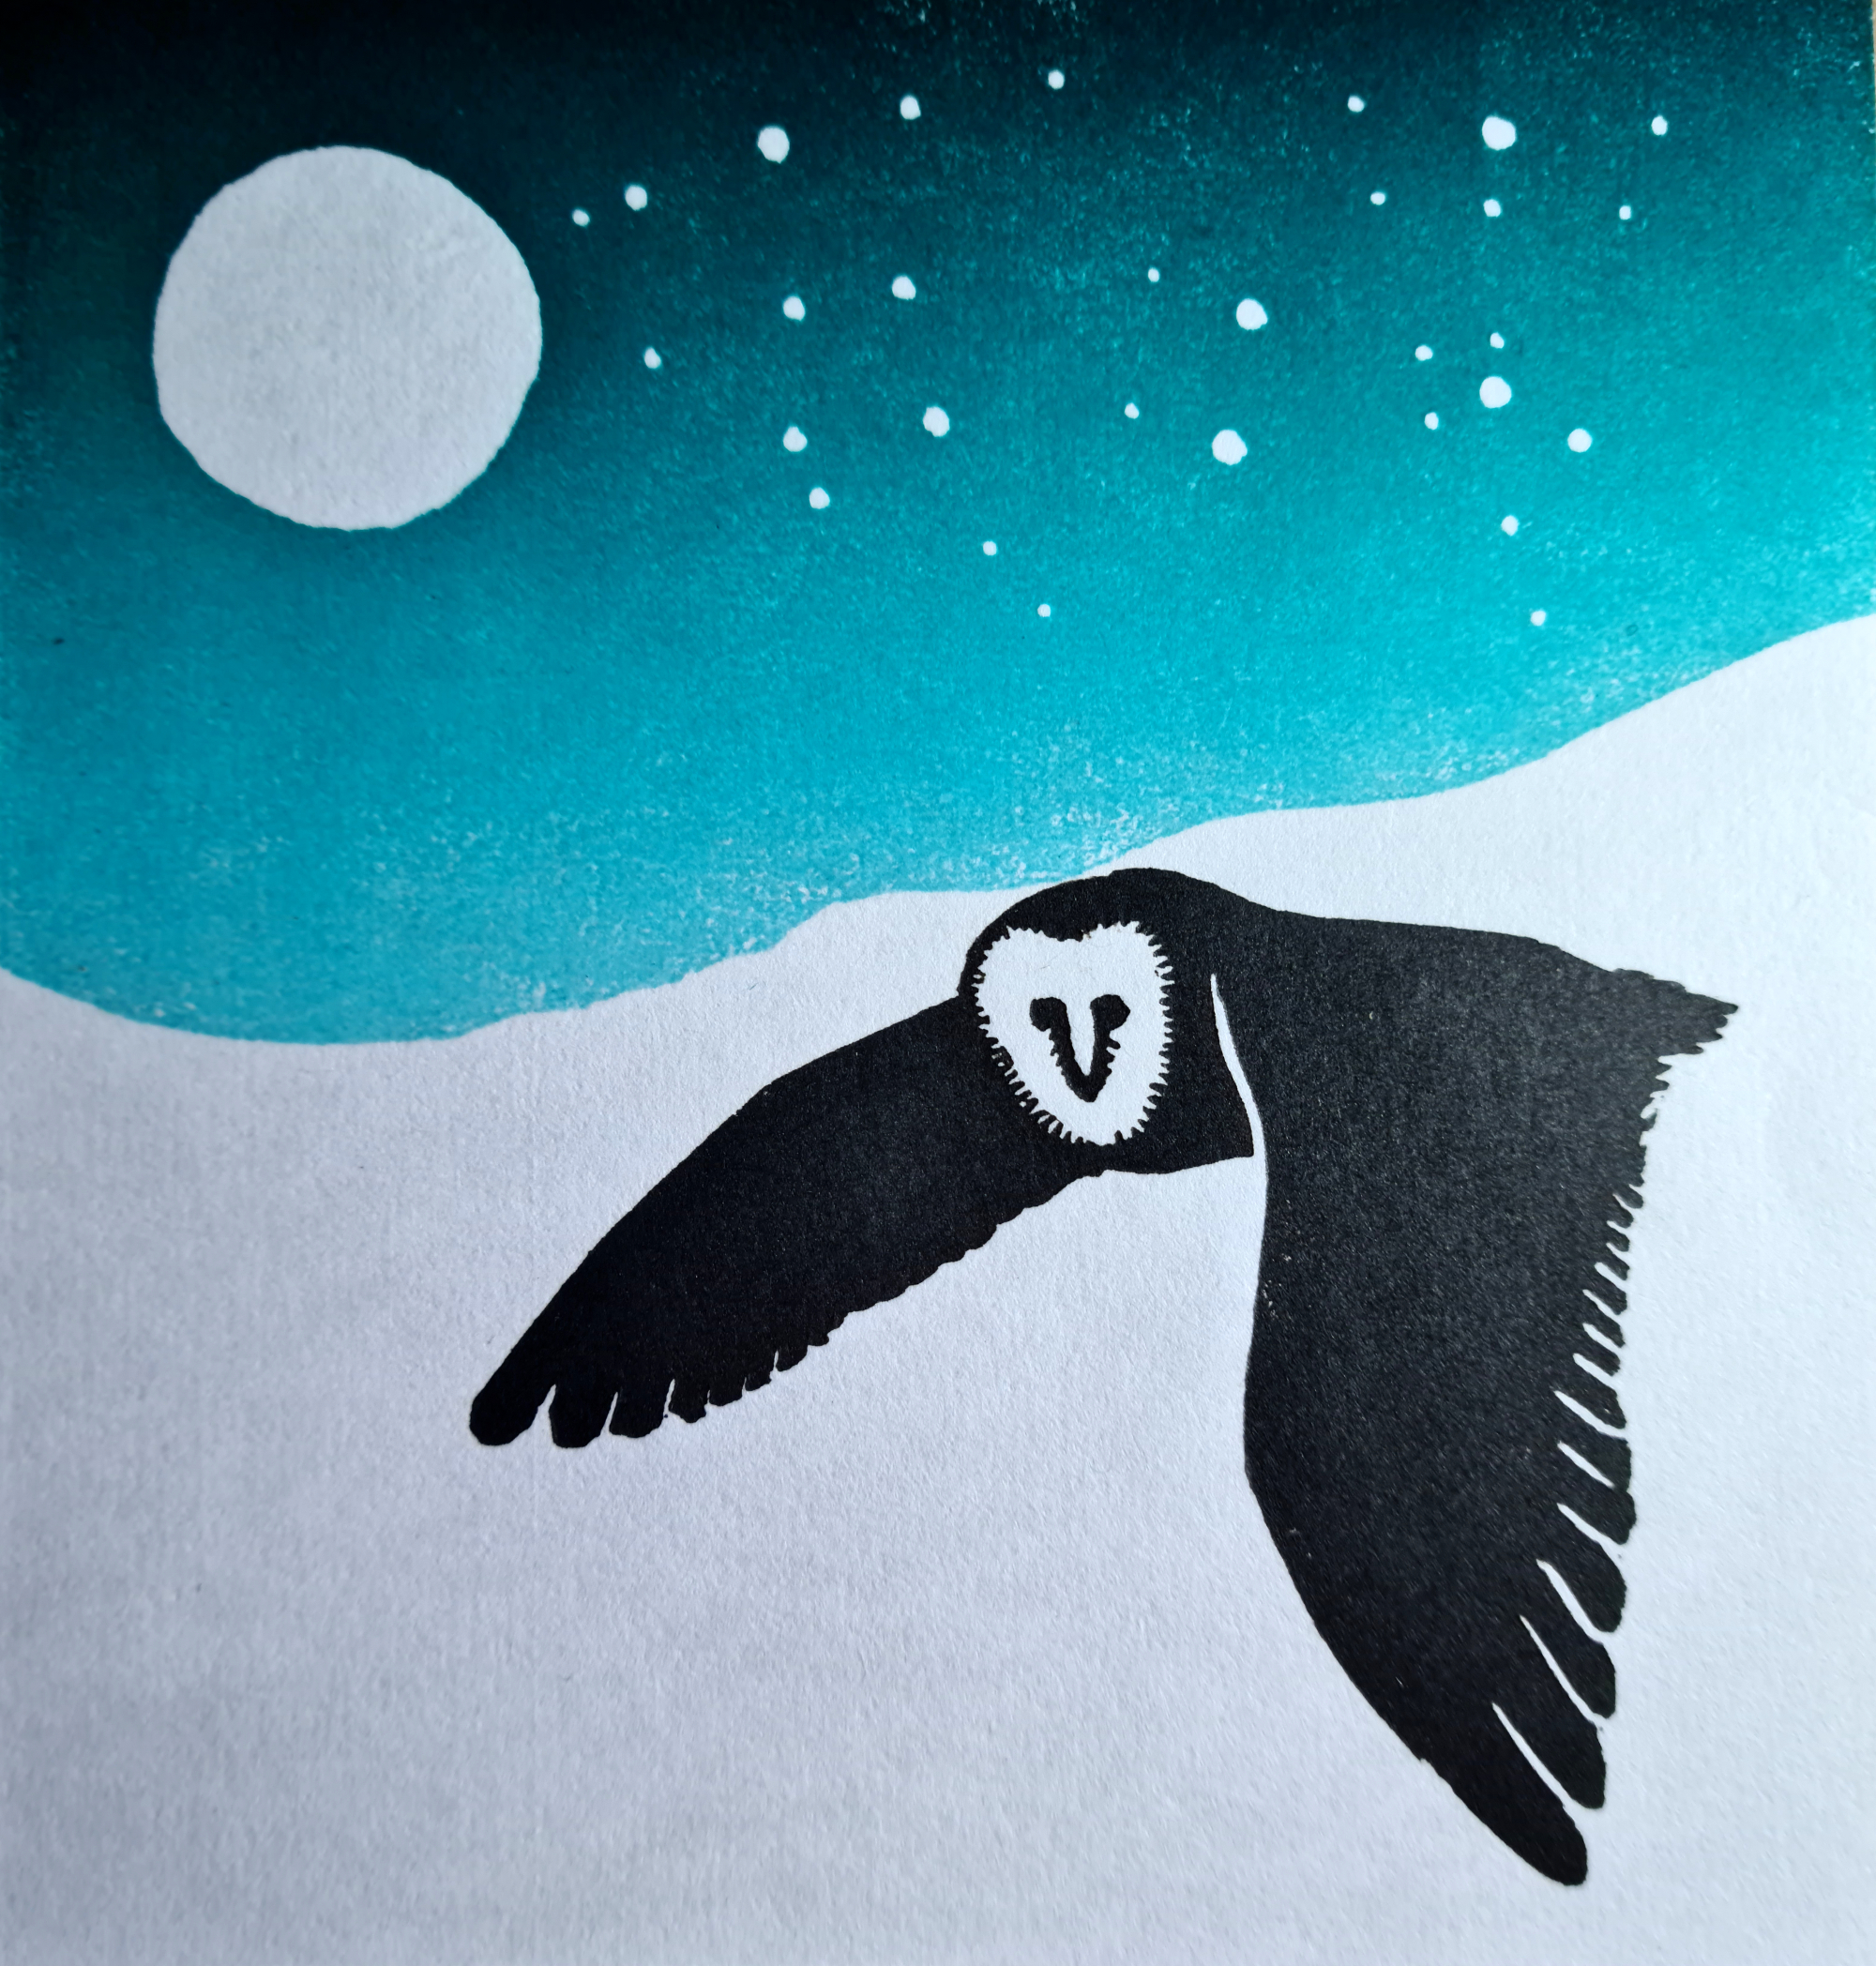 Winter owl image